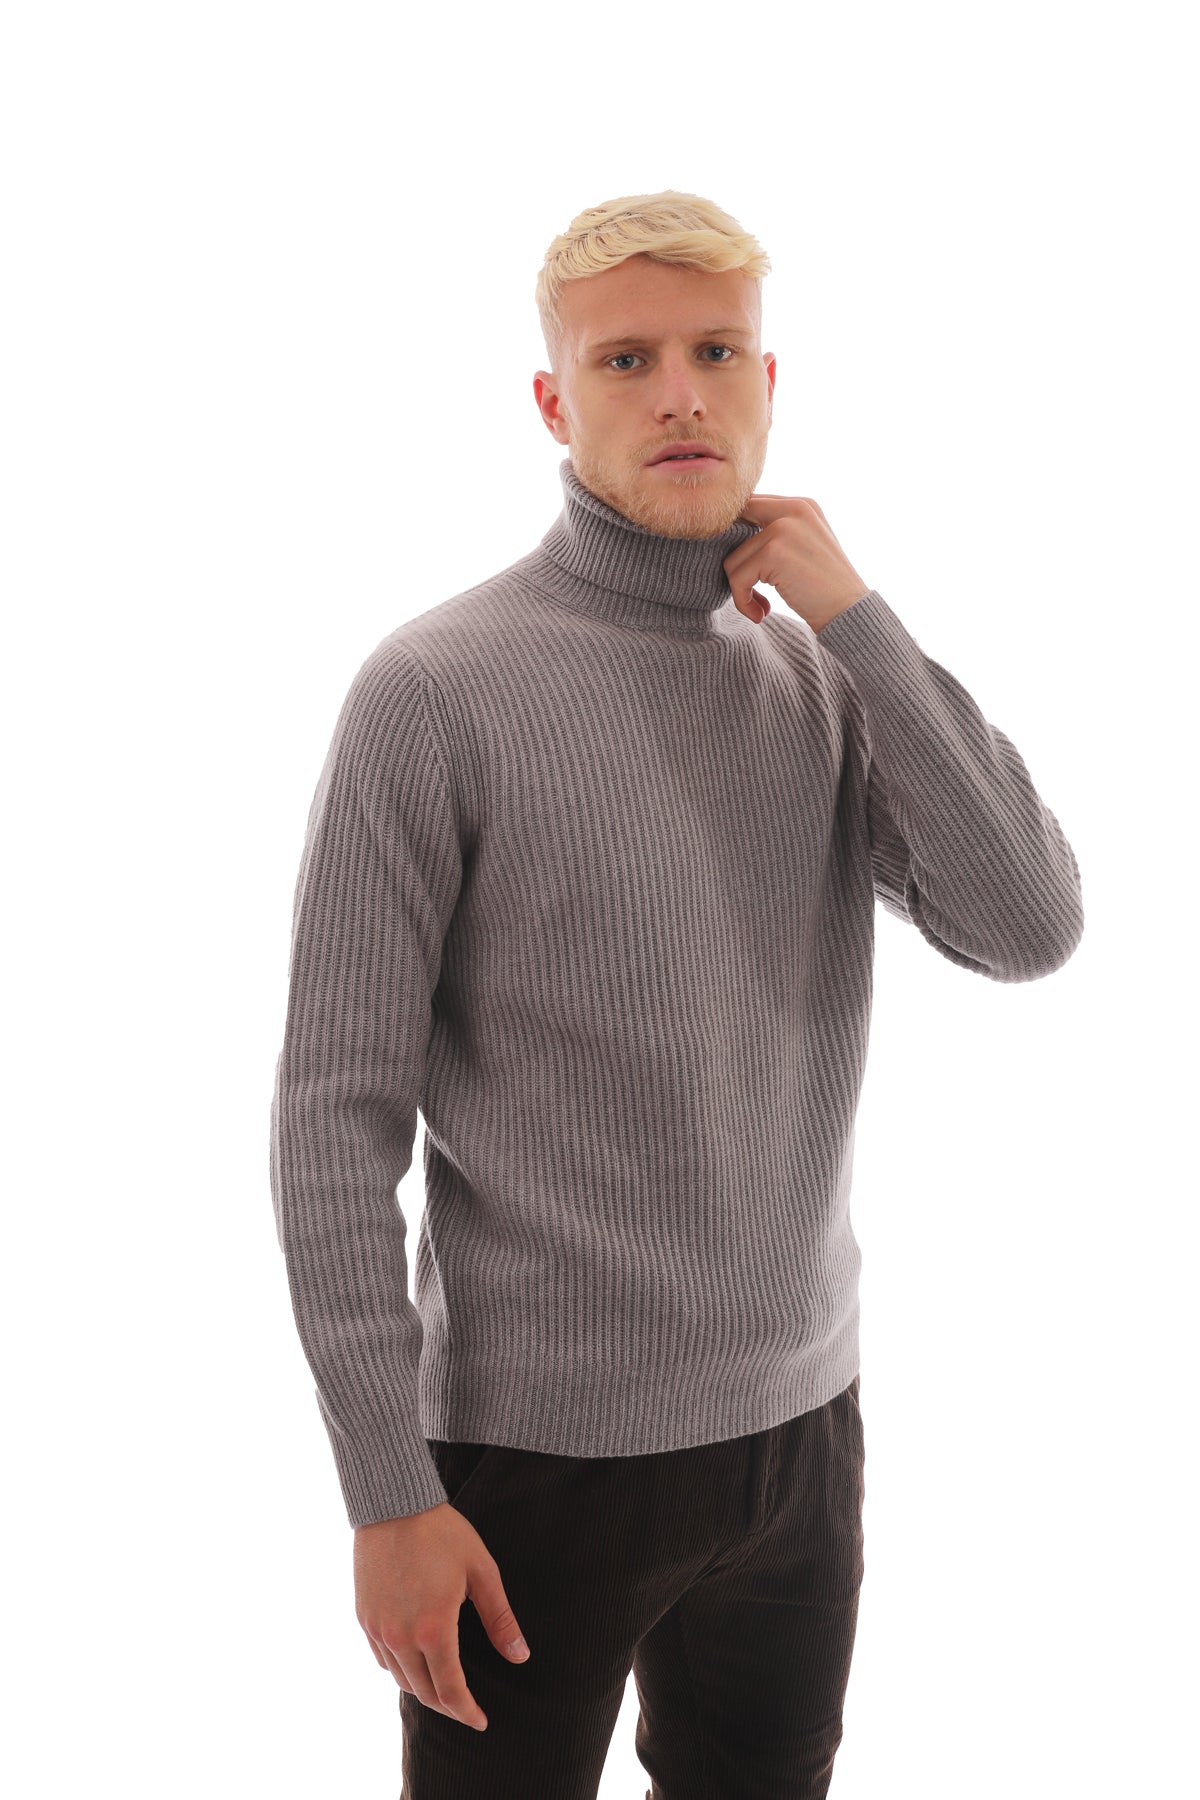 Men's ribbed turtleneck sweater